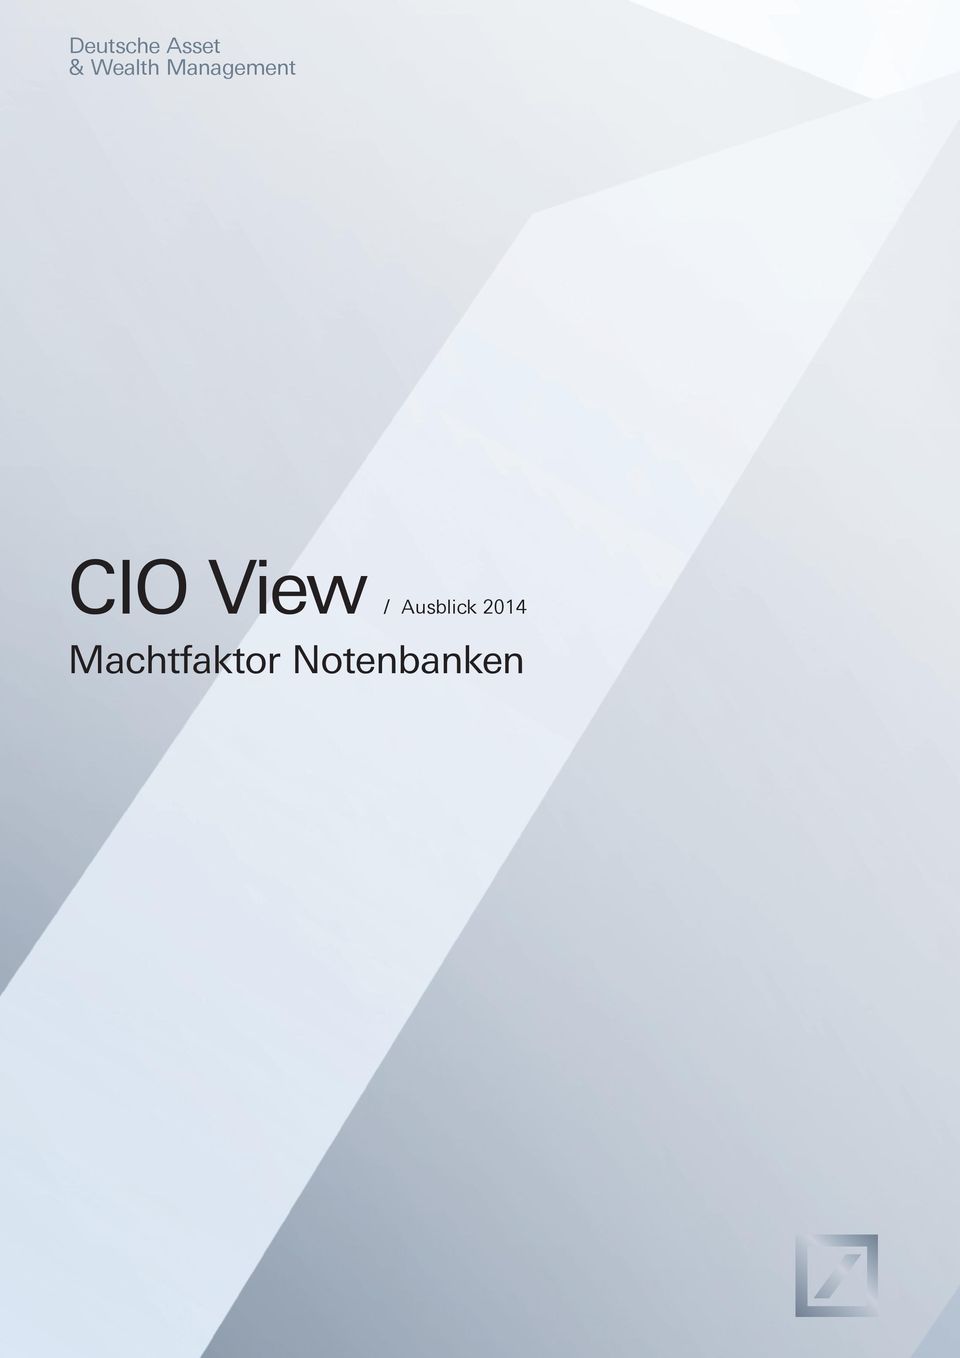 CIO View / Ausblick